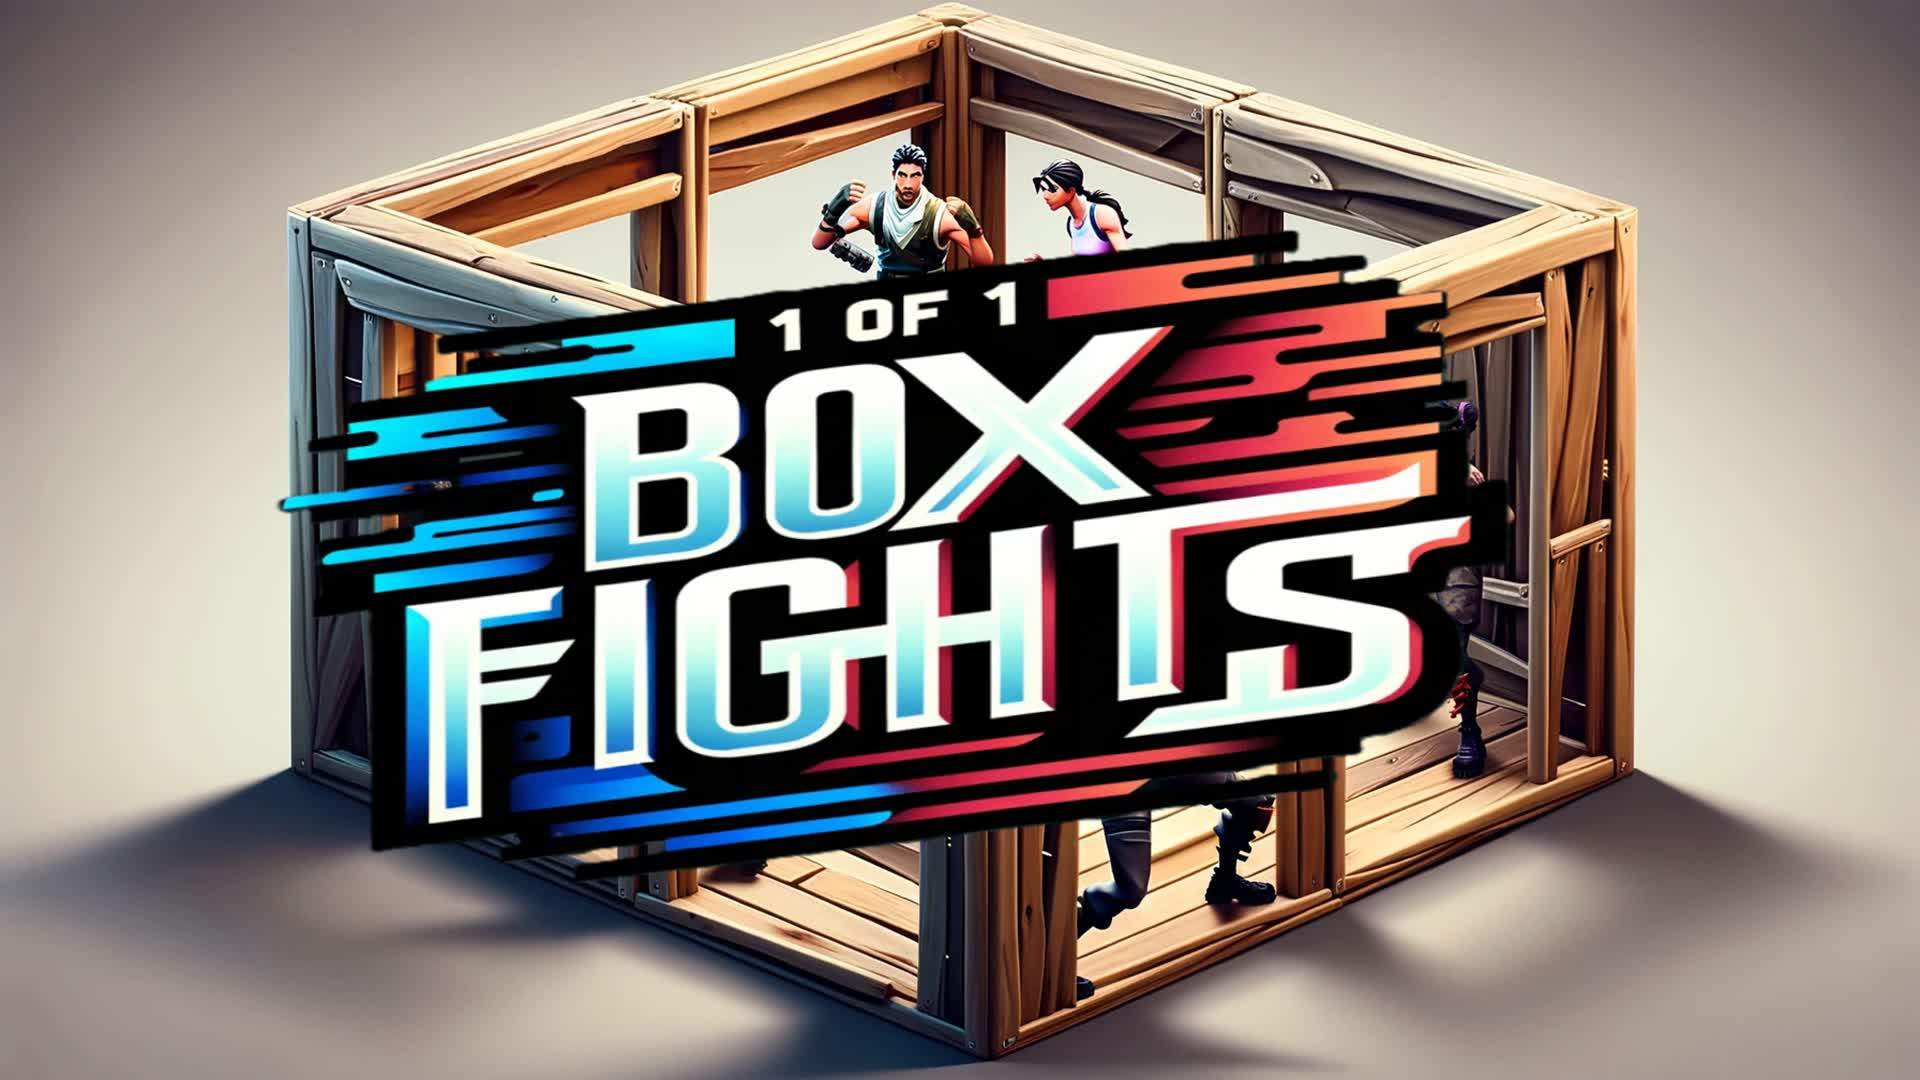 1OF1-BOX FIGHTS-1V1-2V2-3V3-4V4-0 DELAY